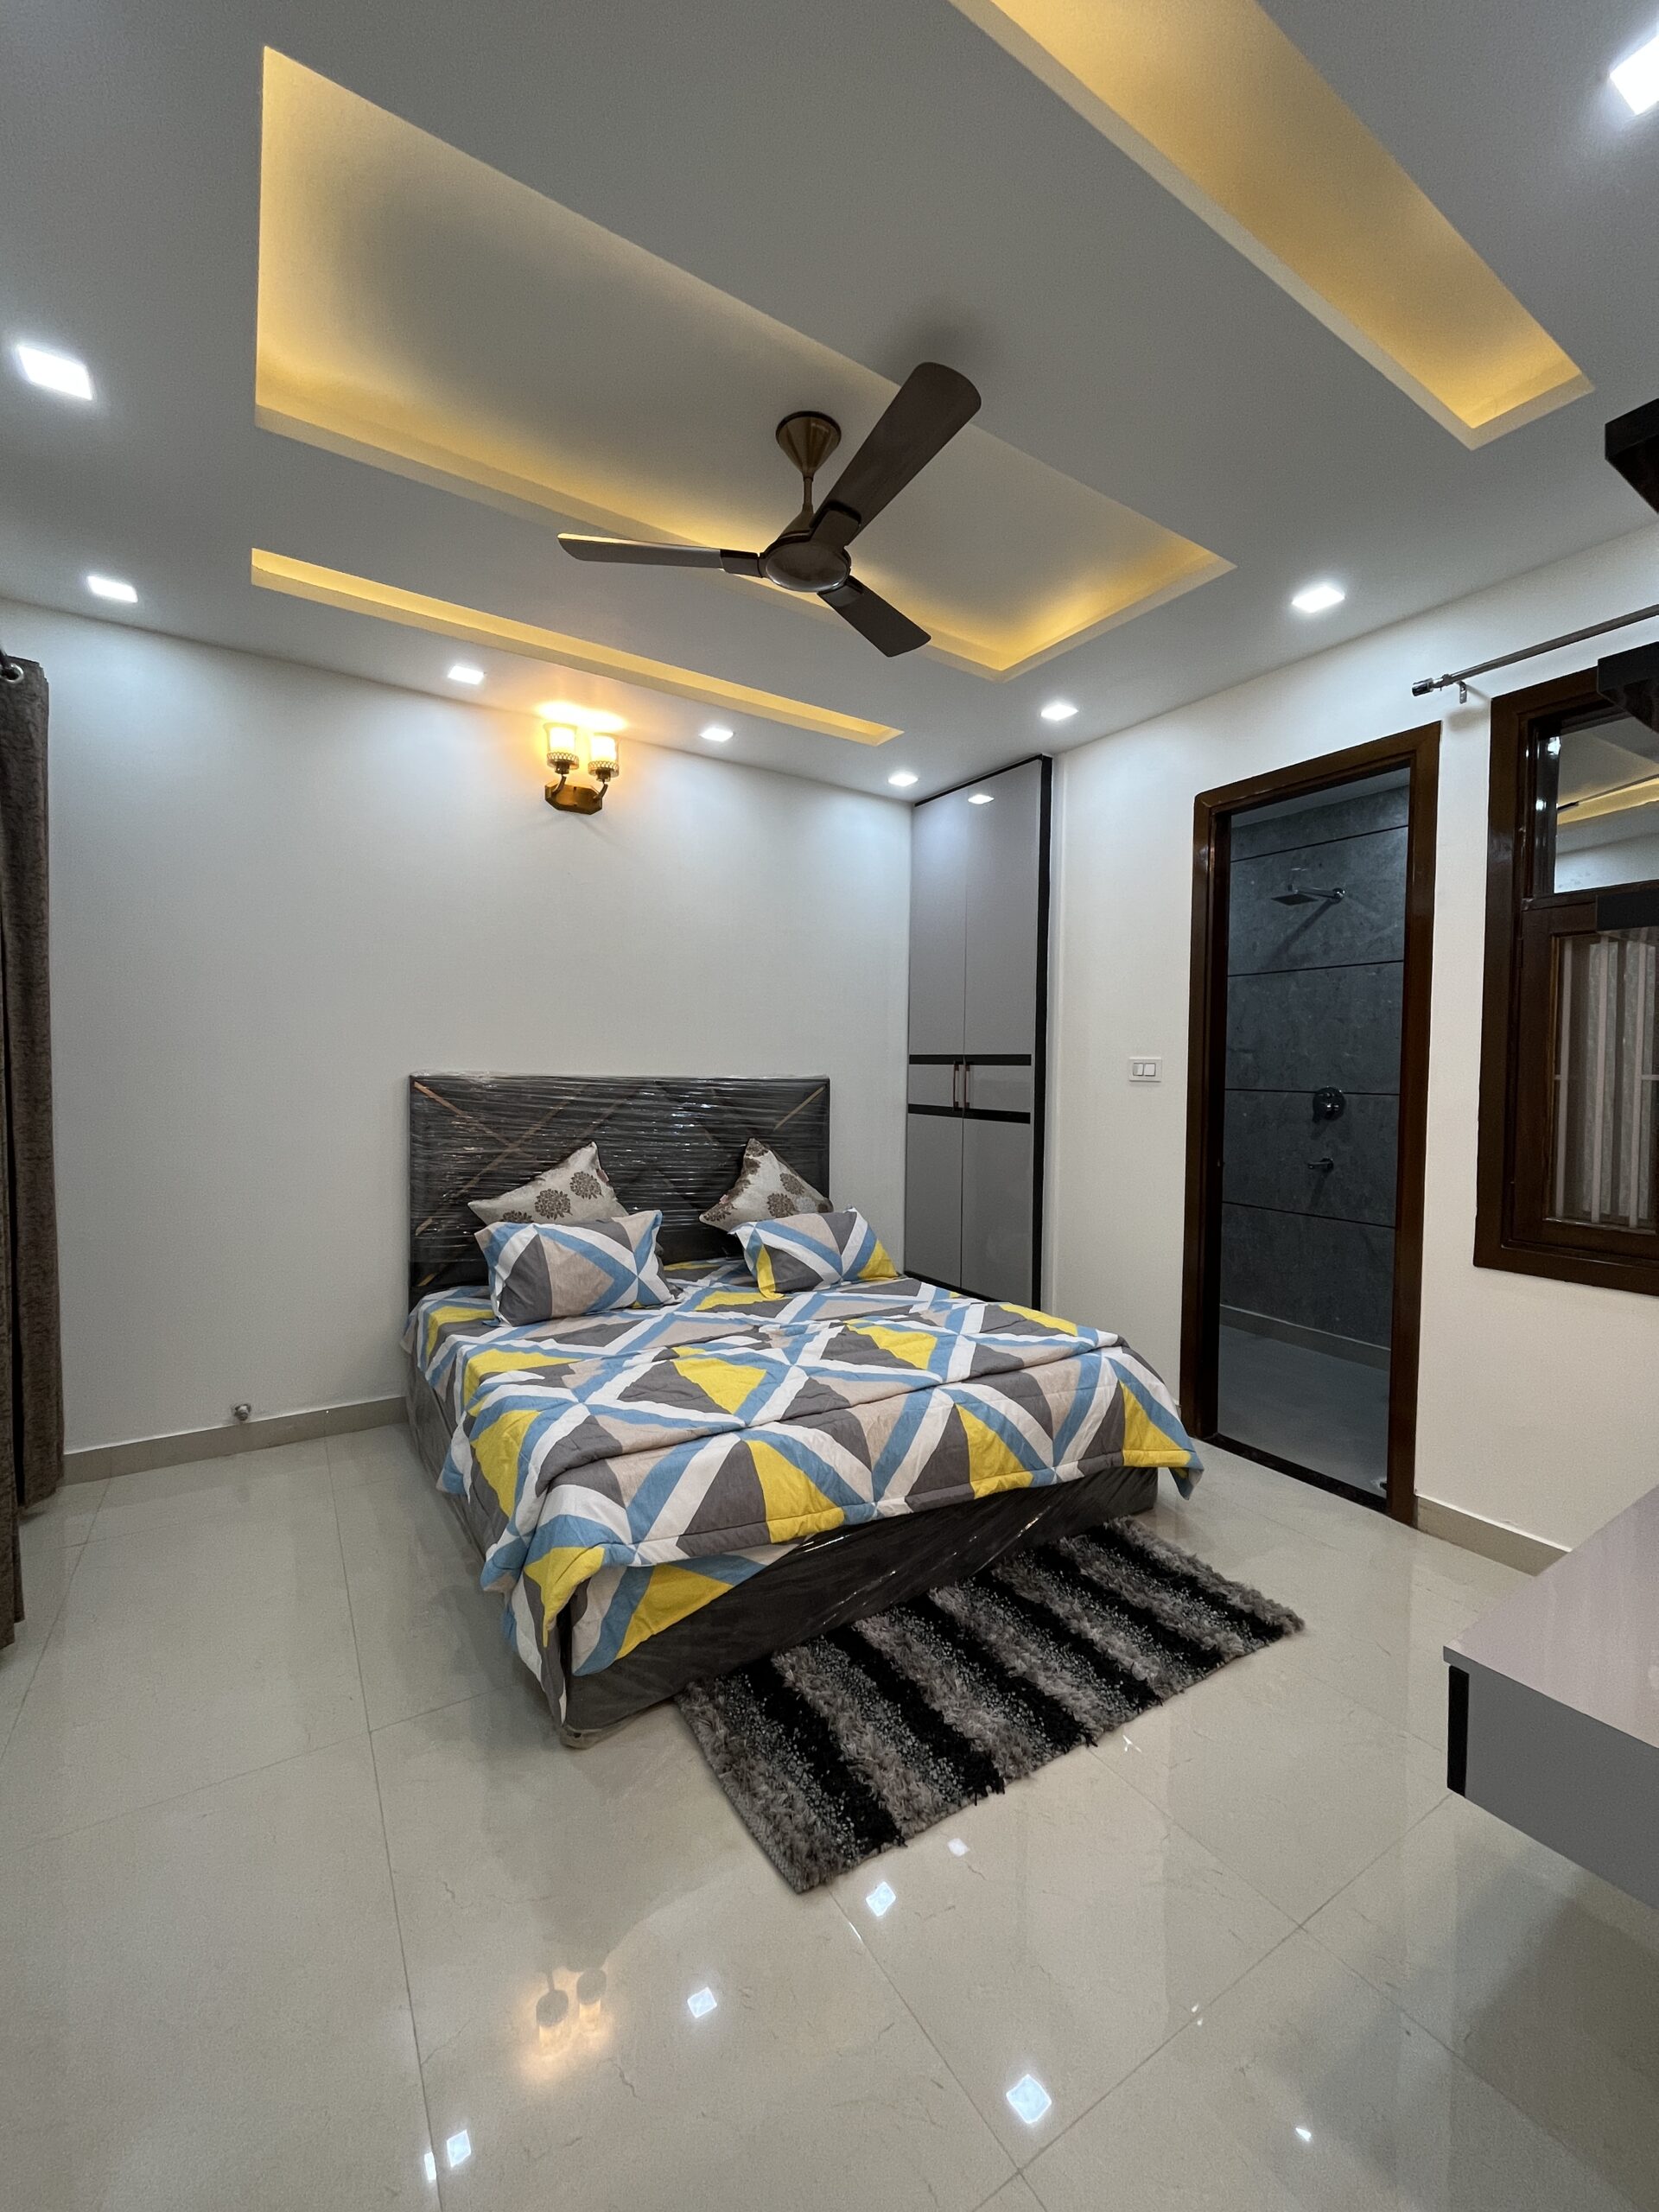 4 BHK Flat in Uttam Nagar | Fully Furnished Flat | Sanvi Real Estate